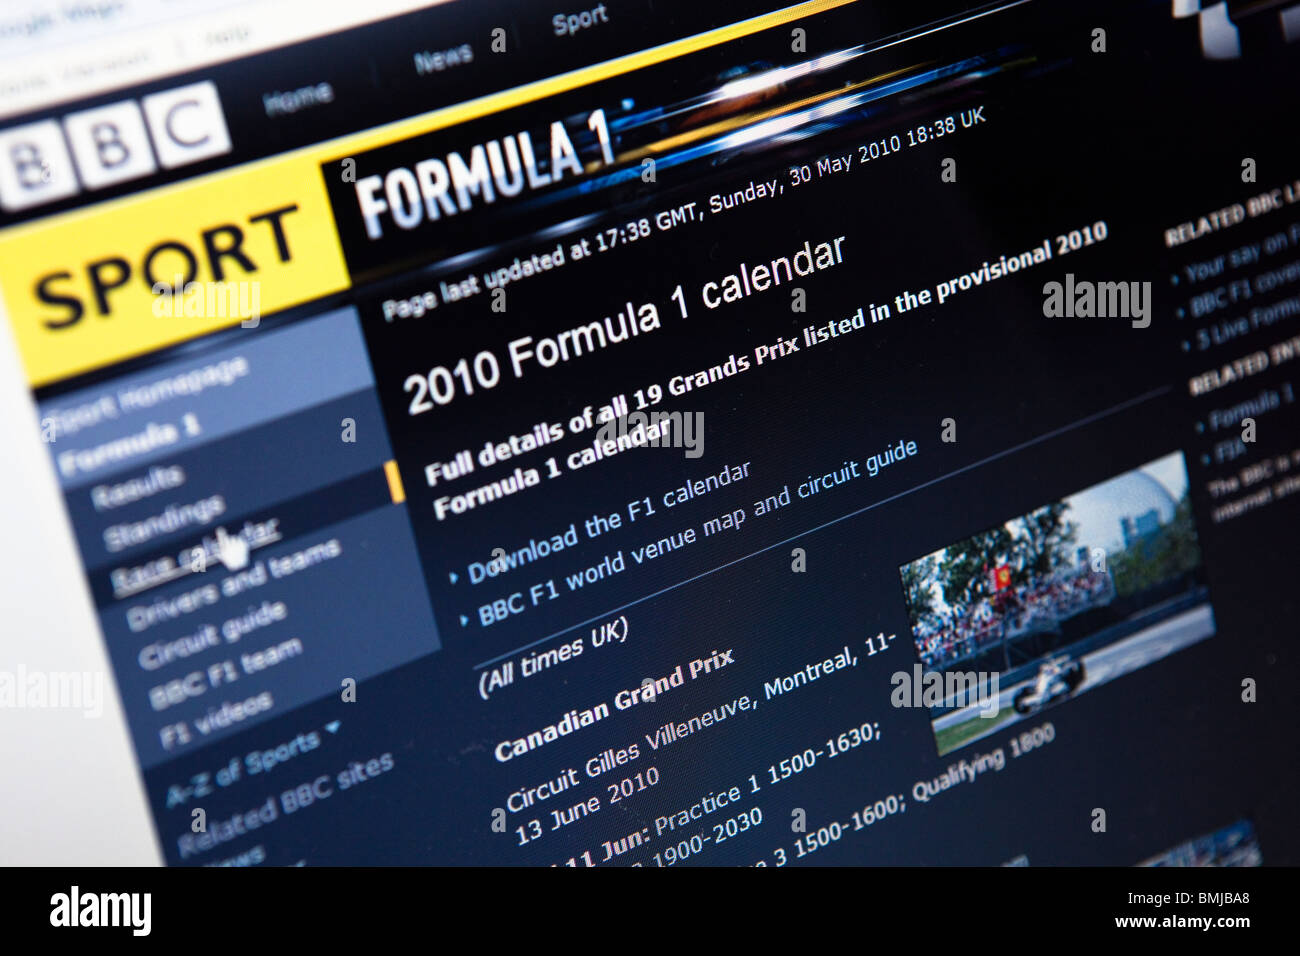 bbc sport formula 1 results